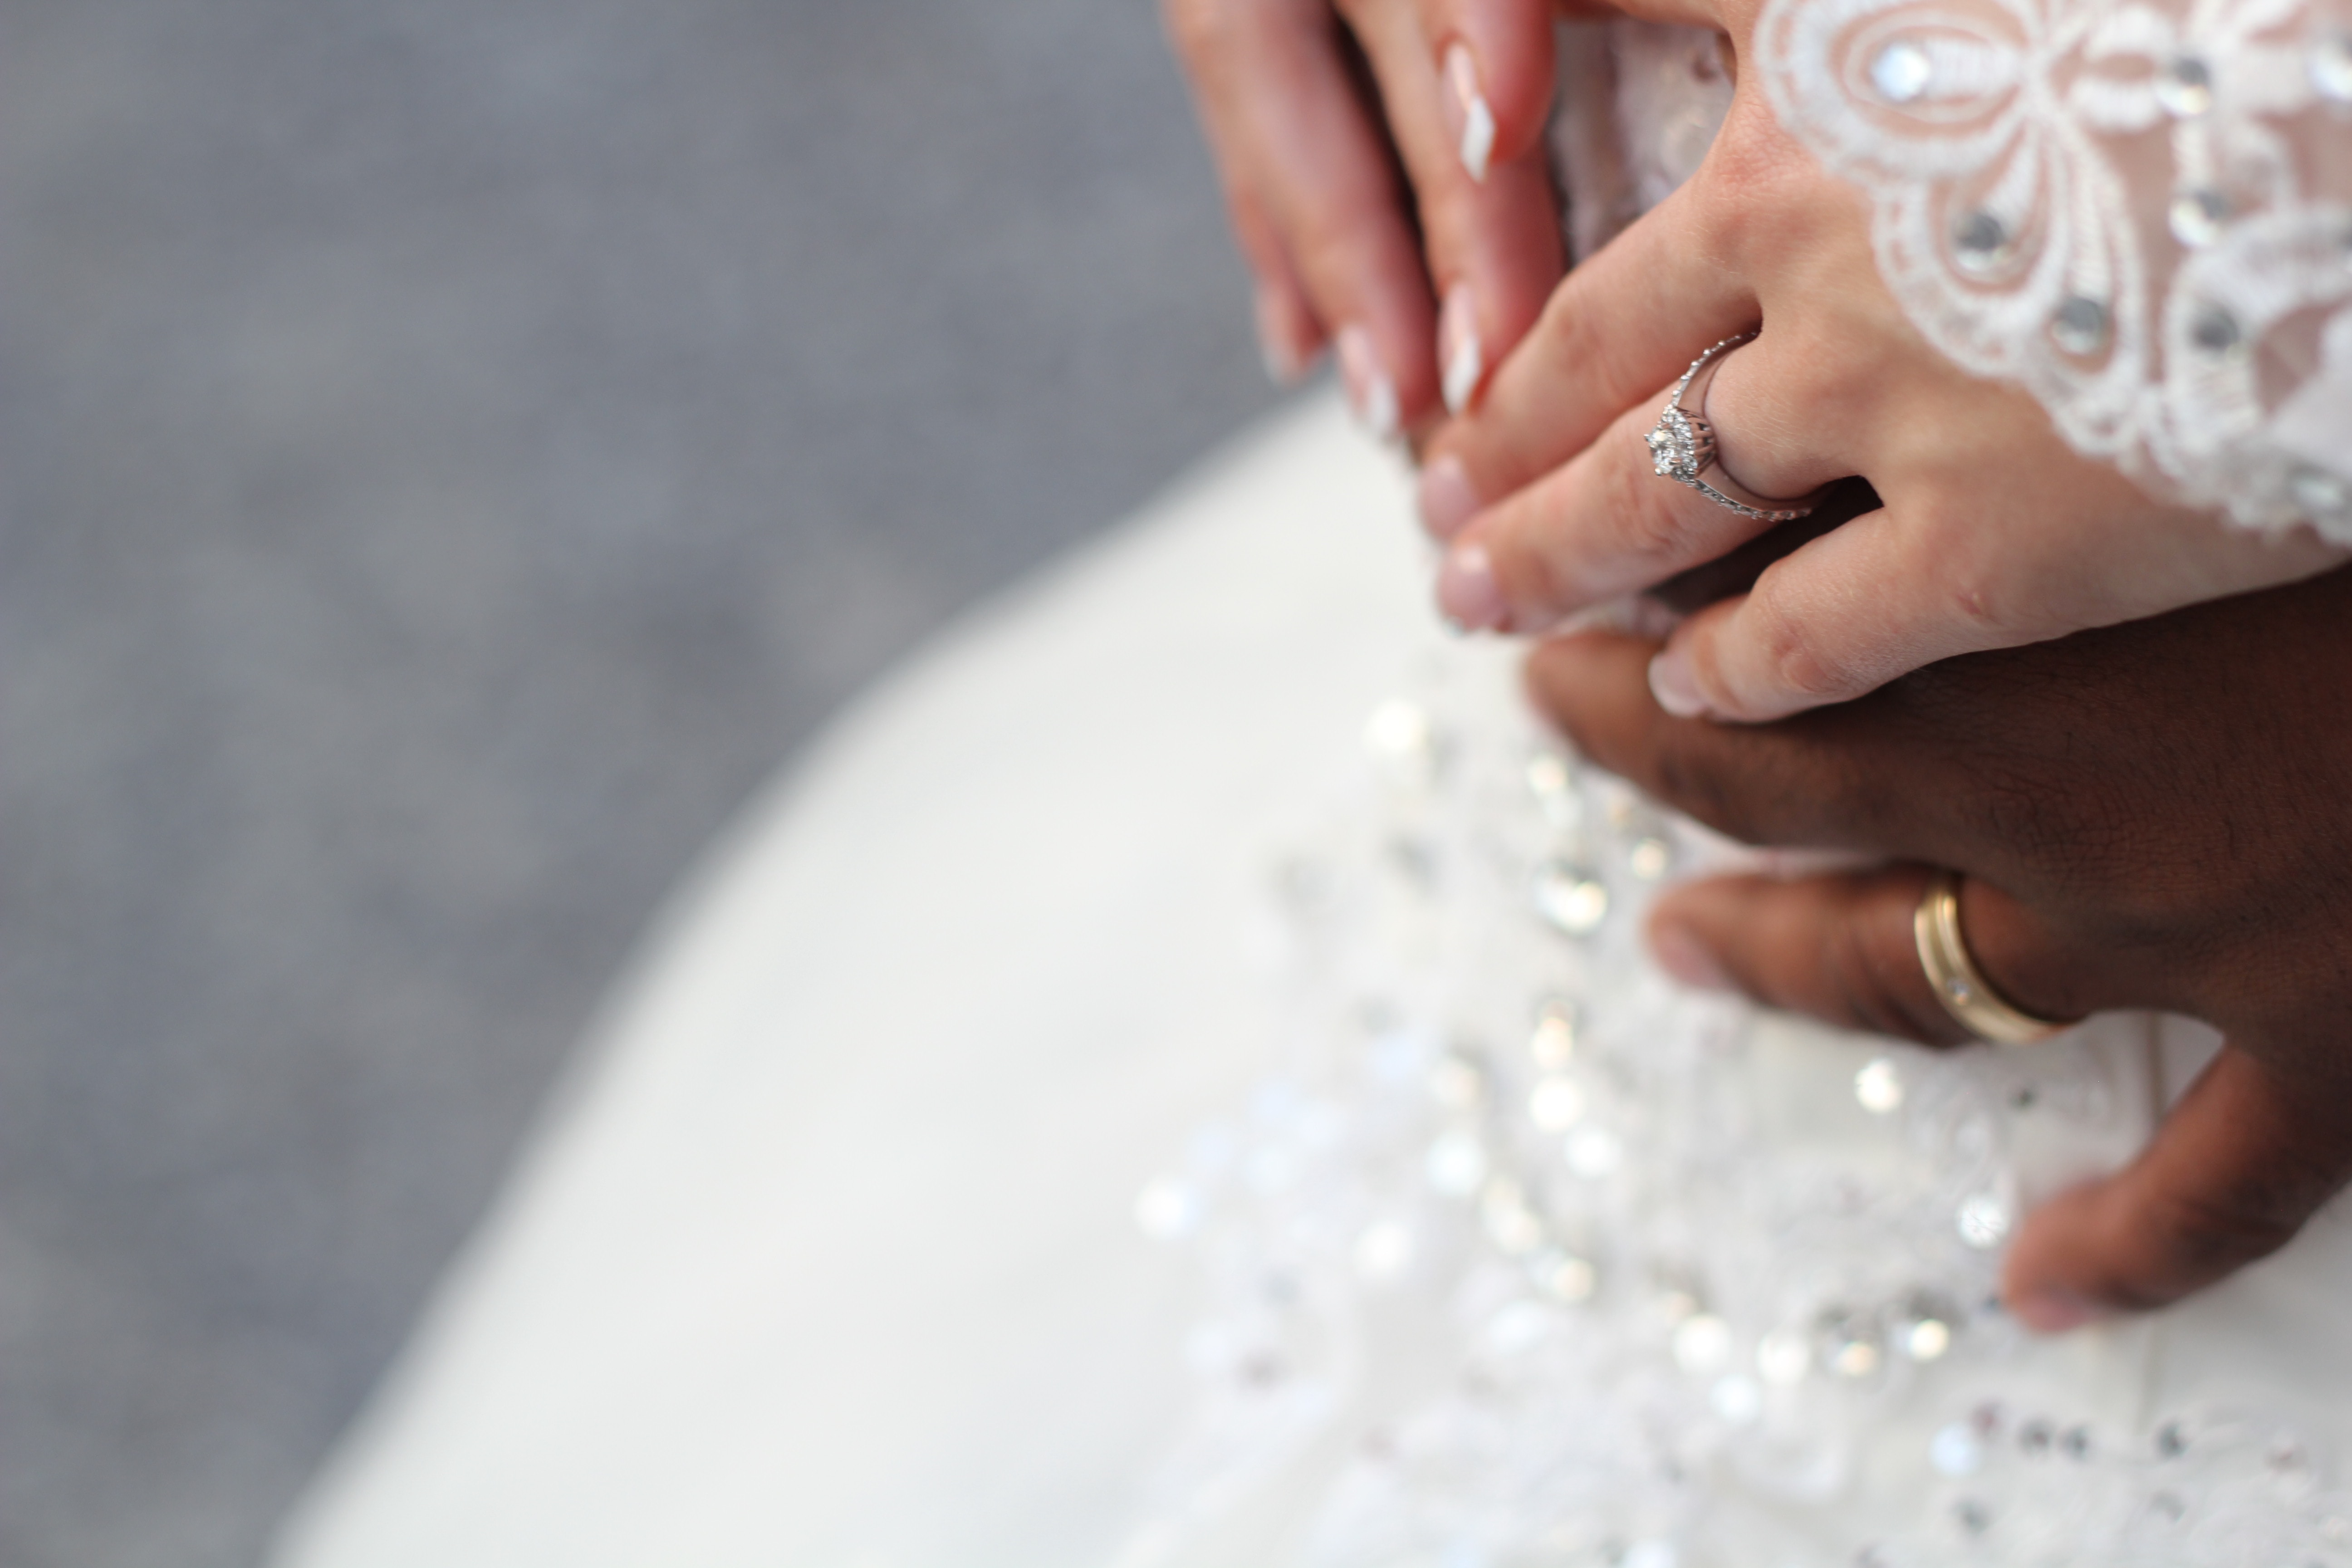 To Μίσιγκαν βάζει τέλος στους παιδικούς γάμους - 300.000 παντρεμένοι ανήλικοι σε 18 χρόνια